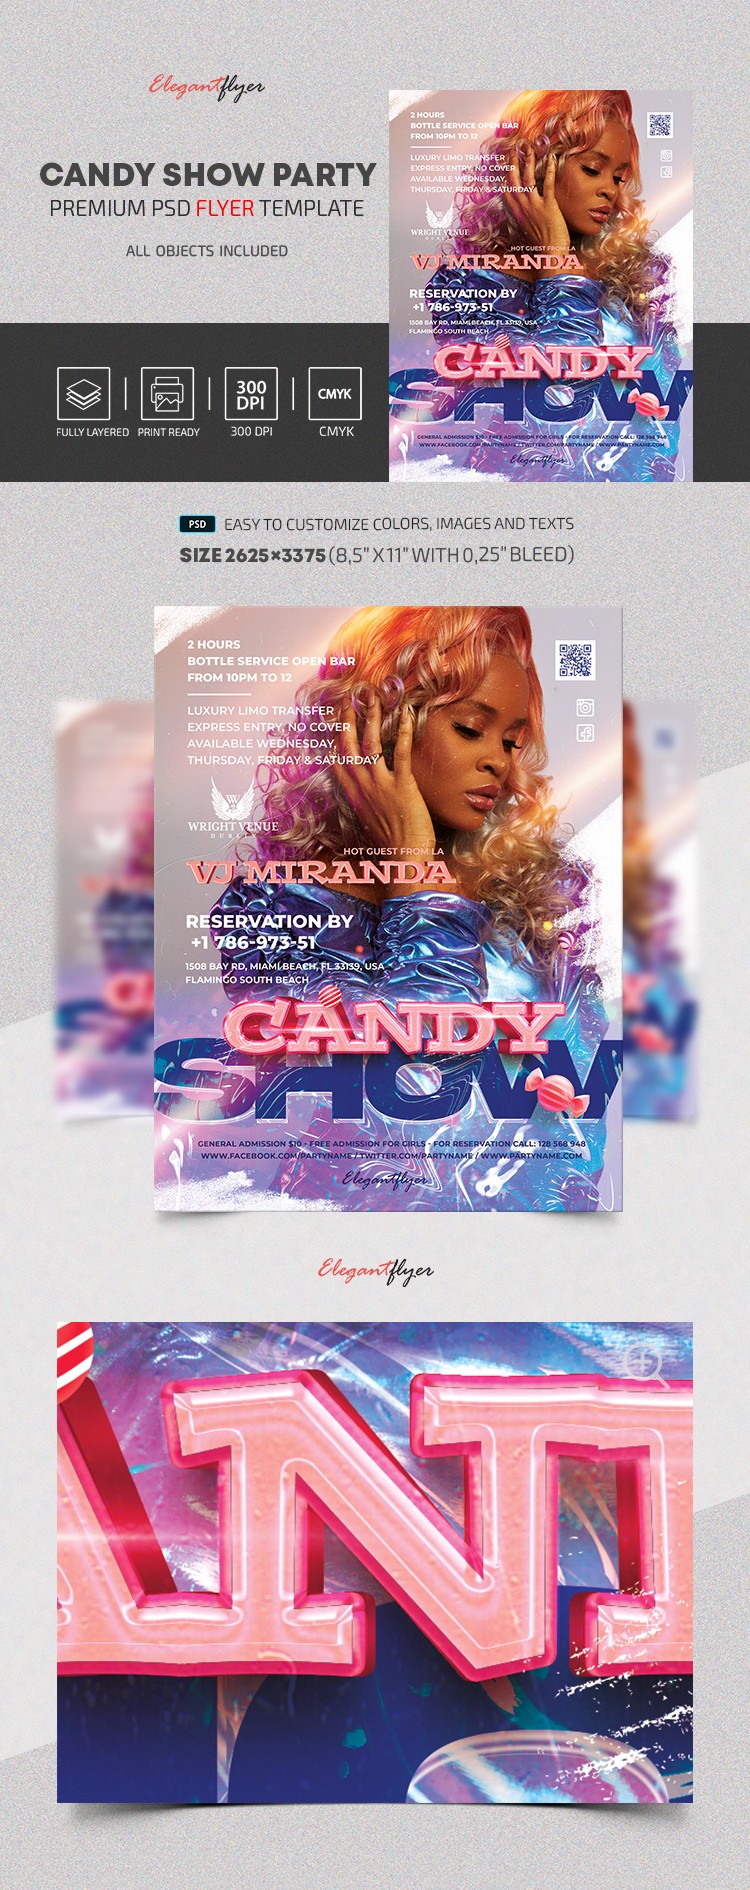 Candy Party Flyer by ElegantFlyer